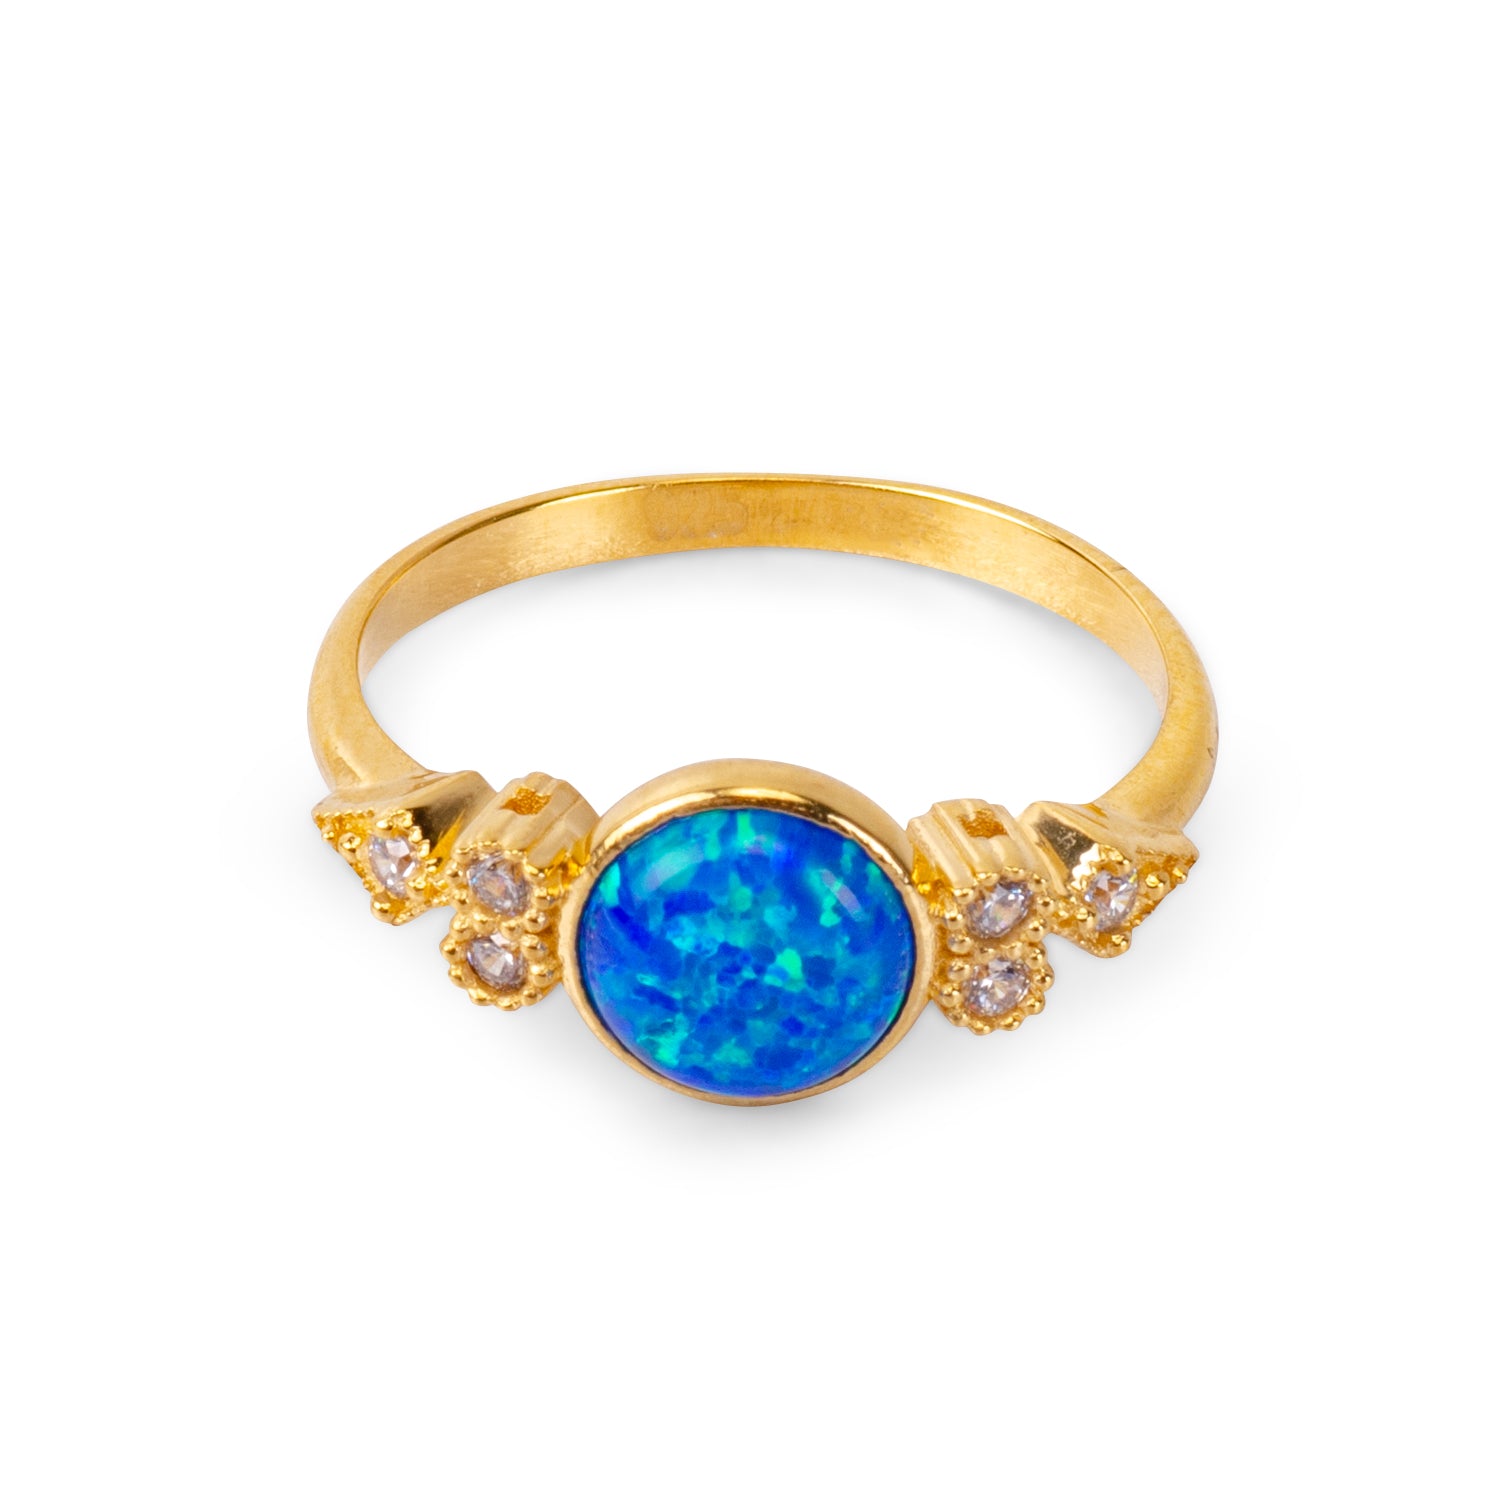 Eleanor Blue Opal 24K Gold Ring - Gold Vermeil Ring - Pretland | Spiritual Crystals & Jewelry